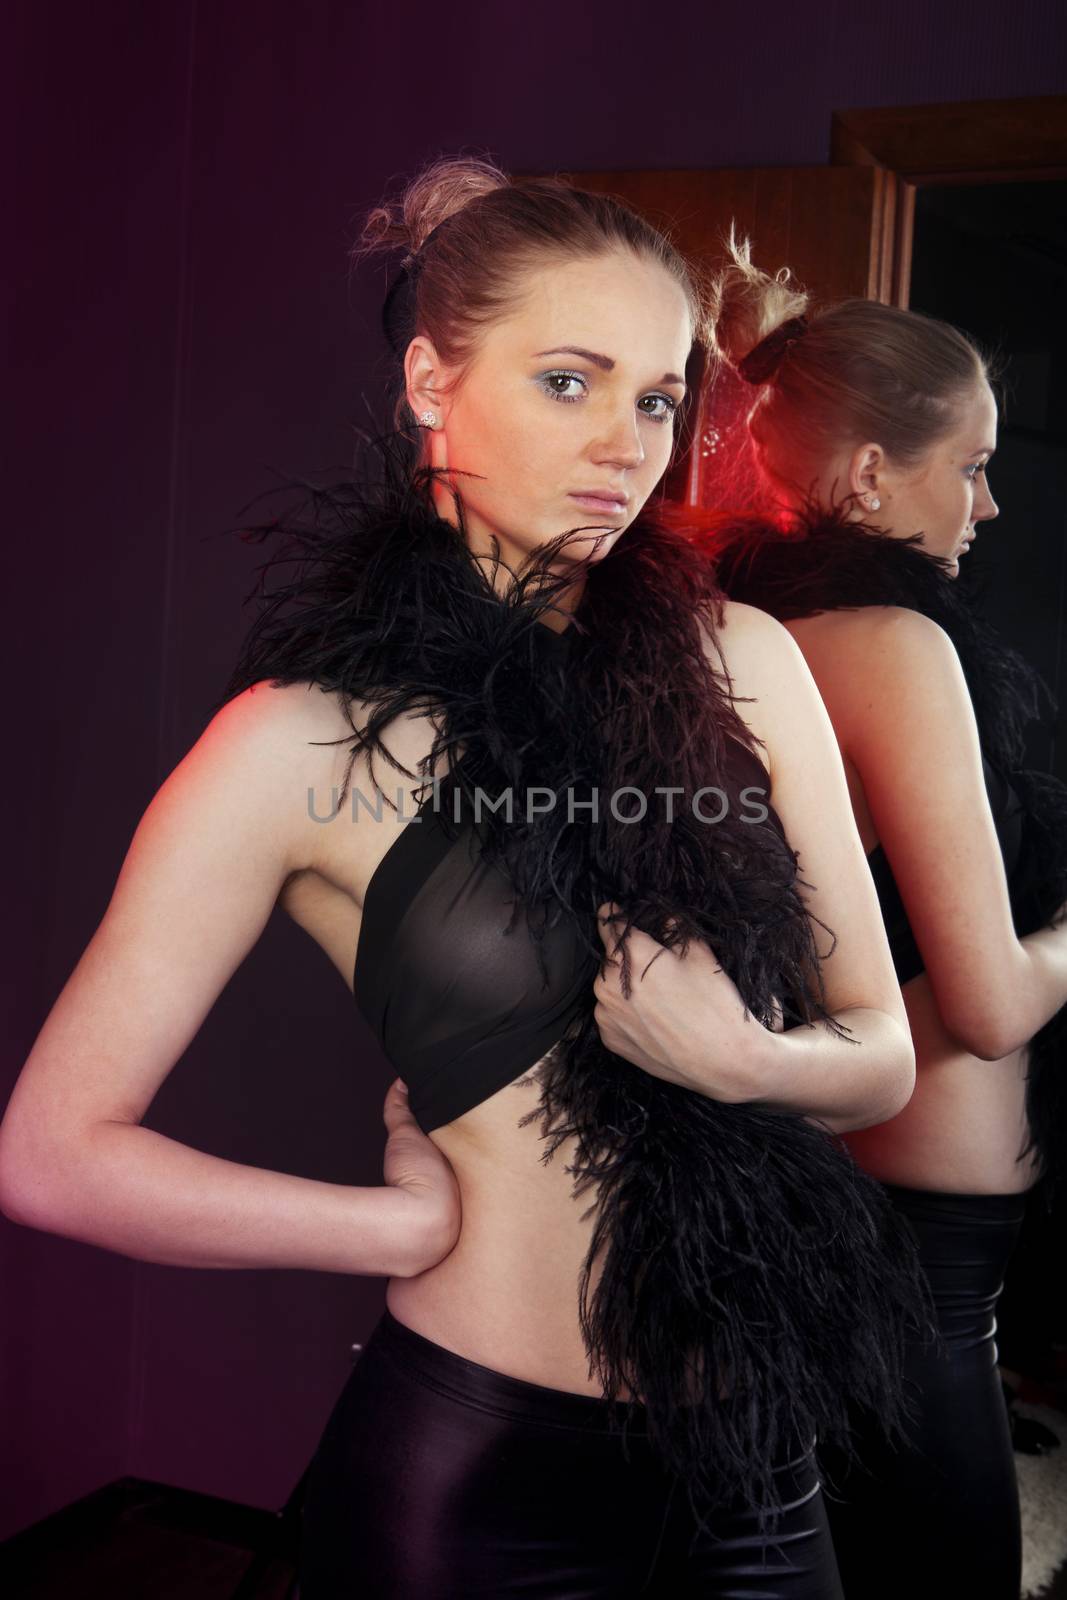 extravagant dancer near a mirror in black scenic clothes